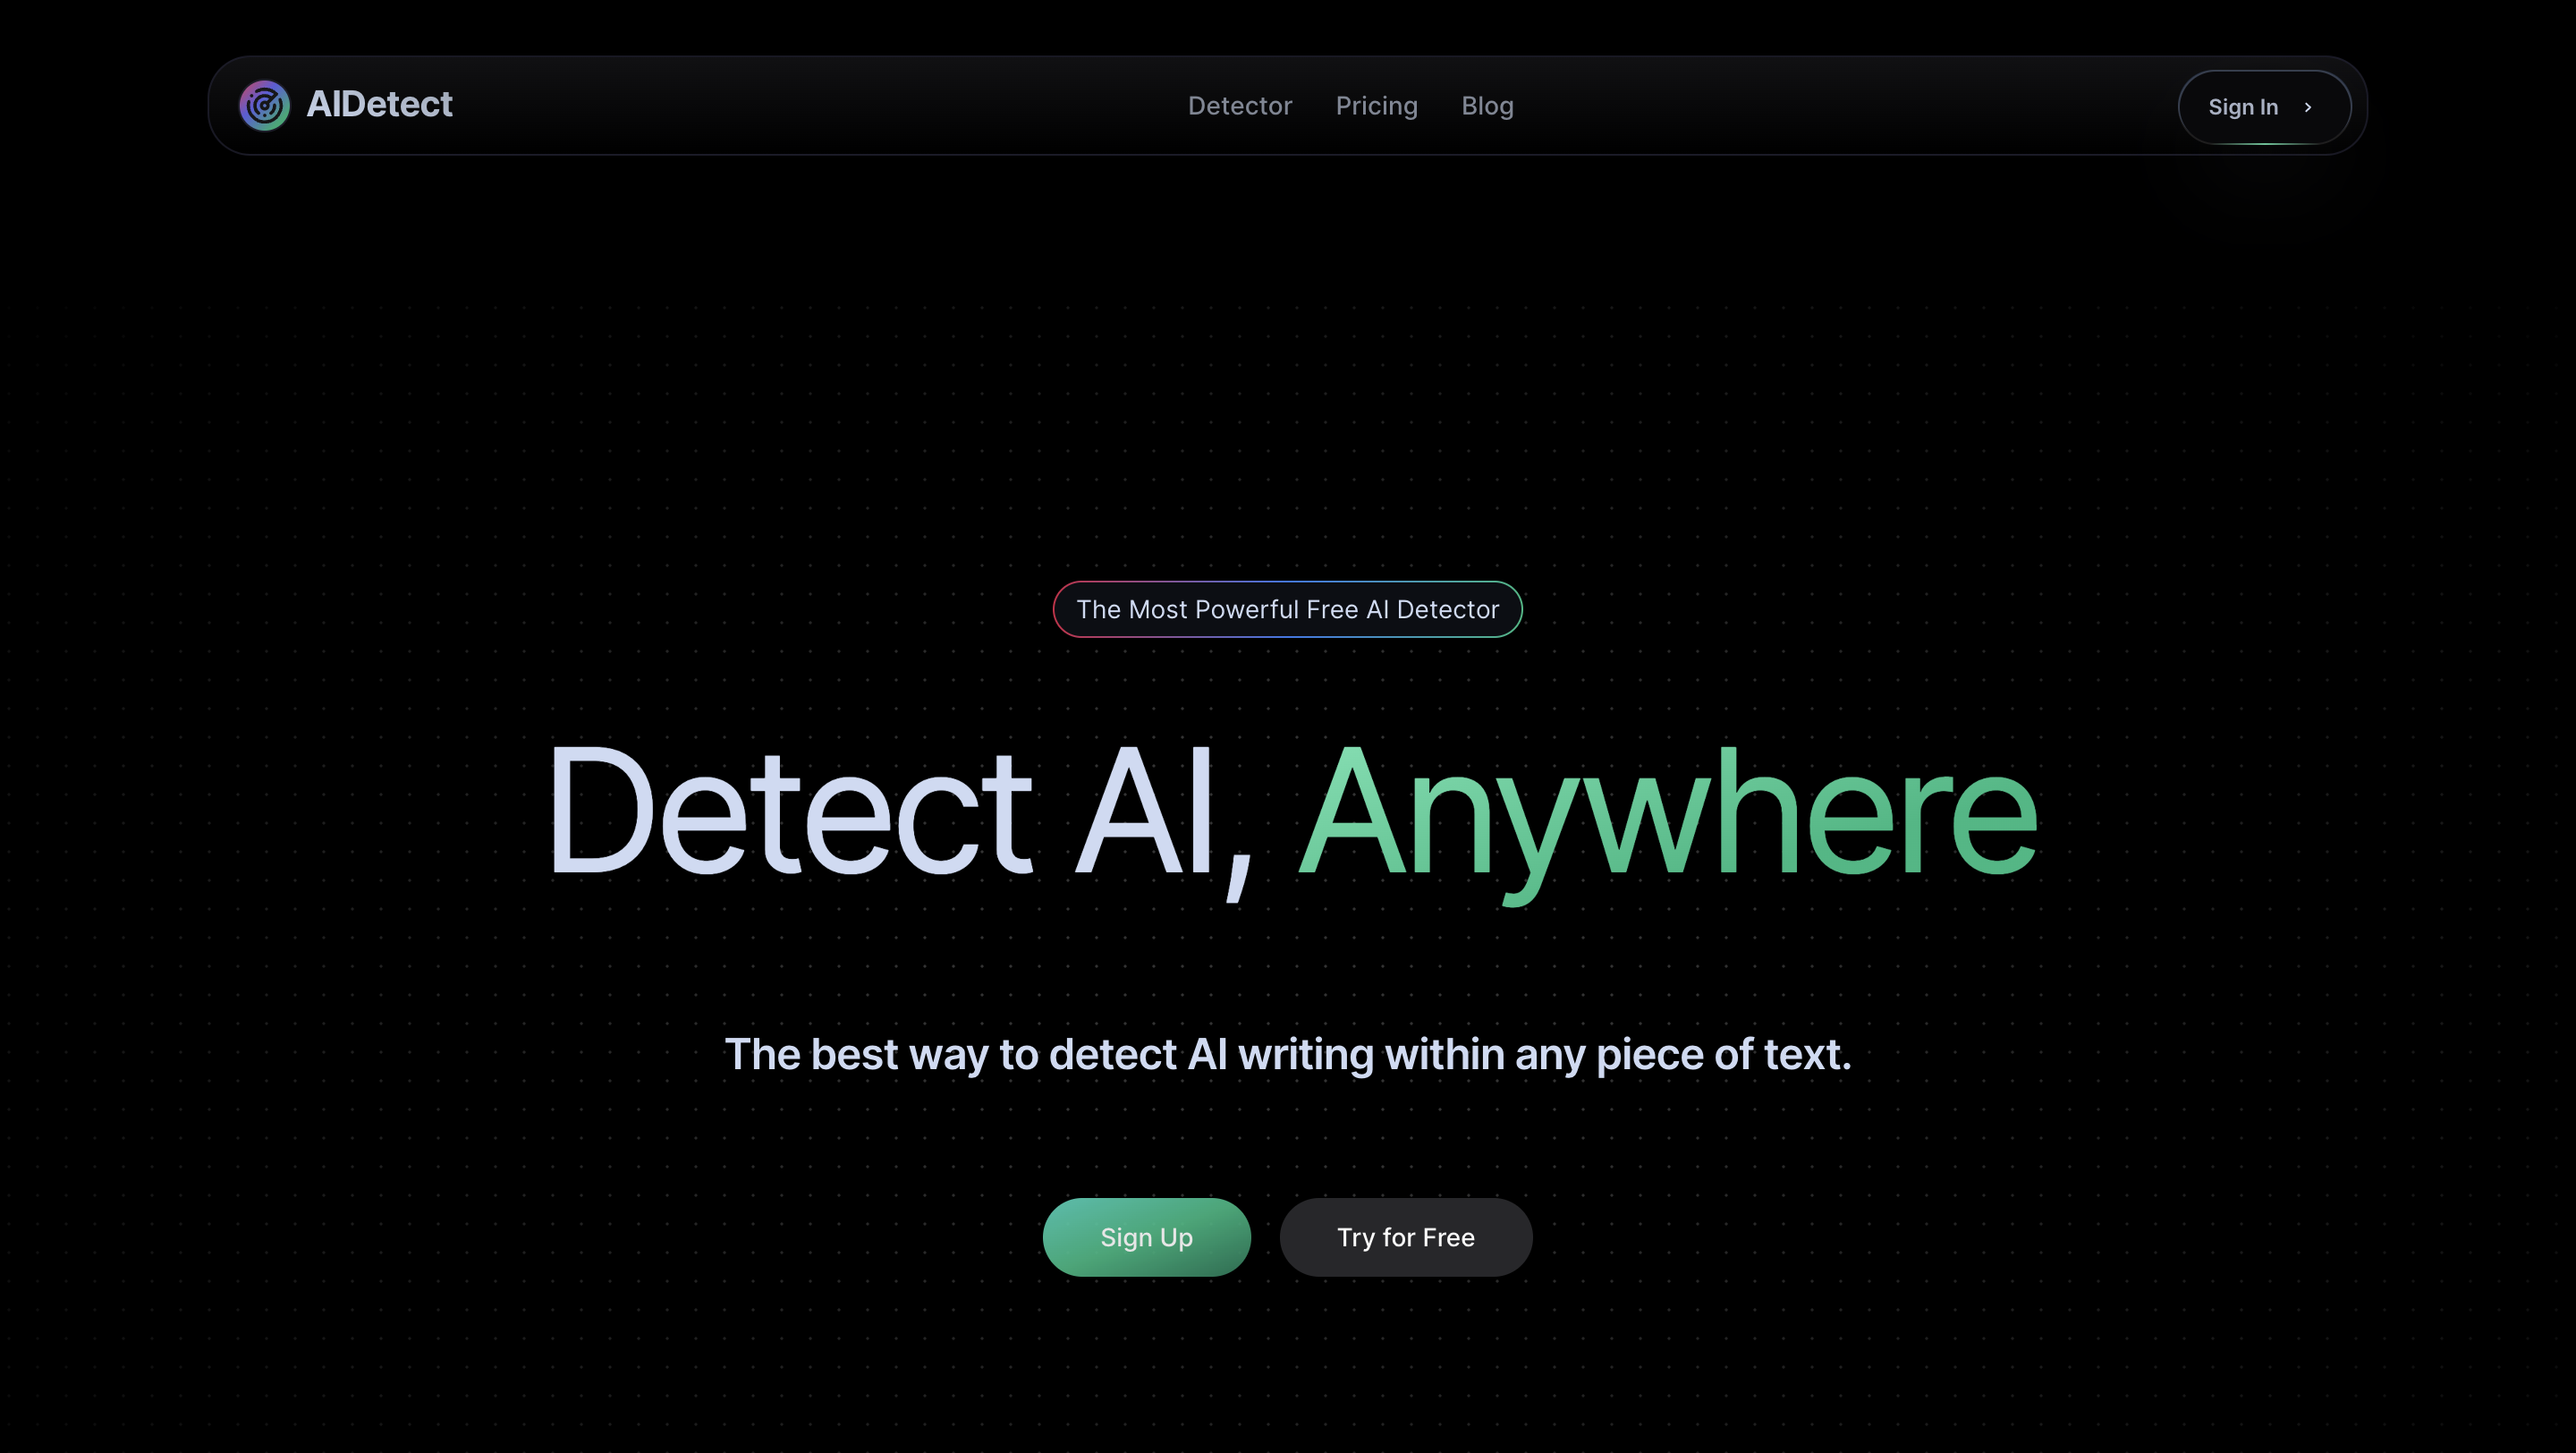 AI Detect Homepage